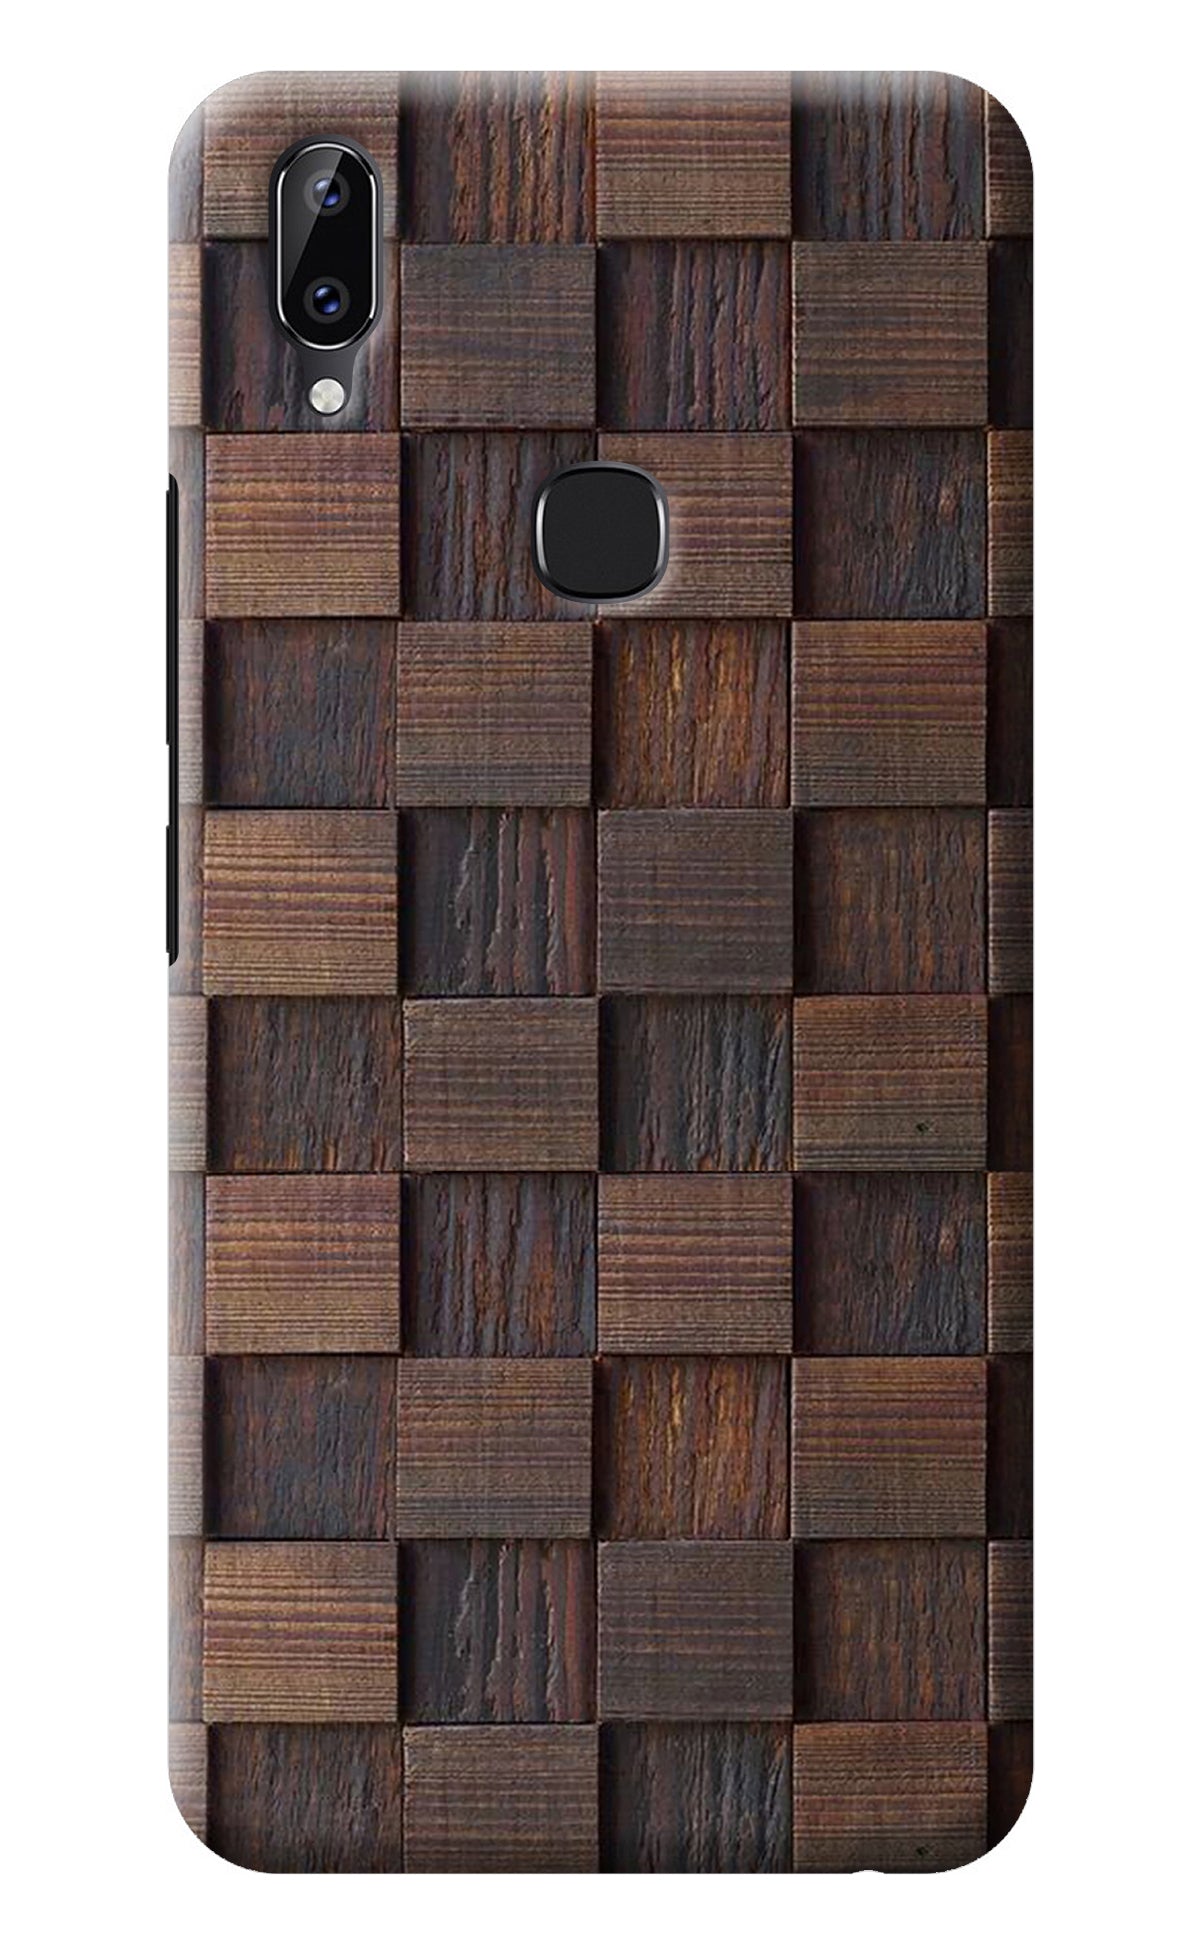 Wooden Cube Design Vivo Y83 Pro Back Cover